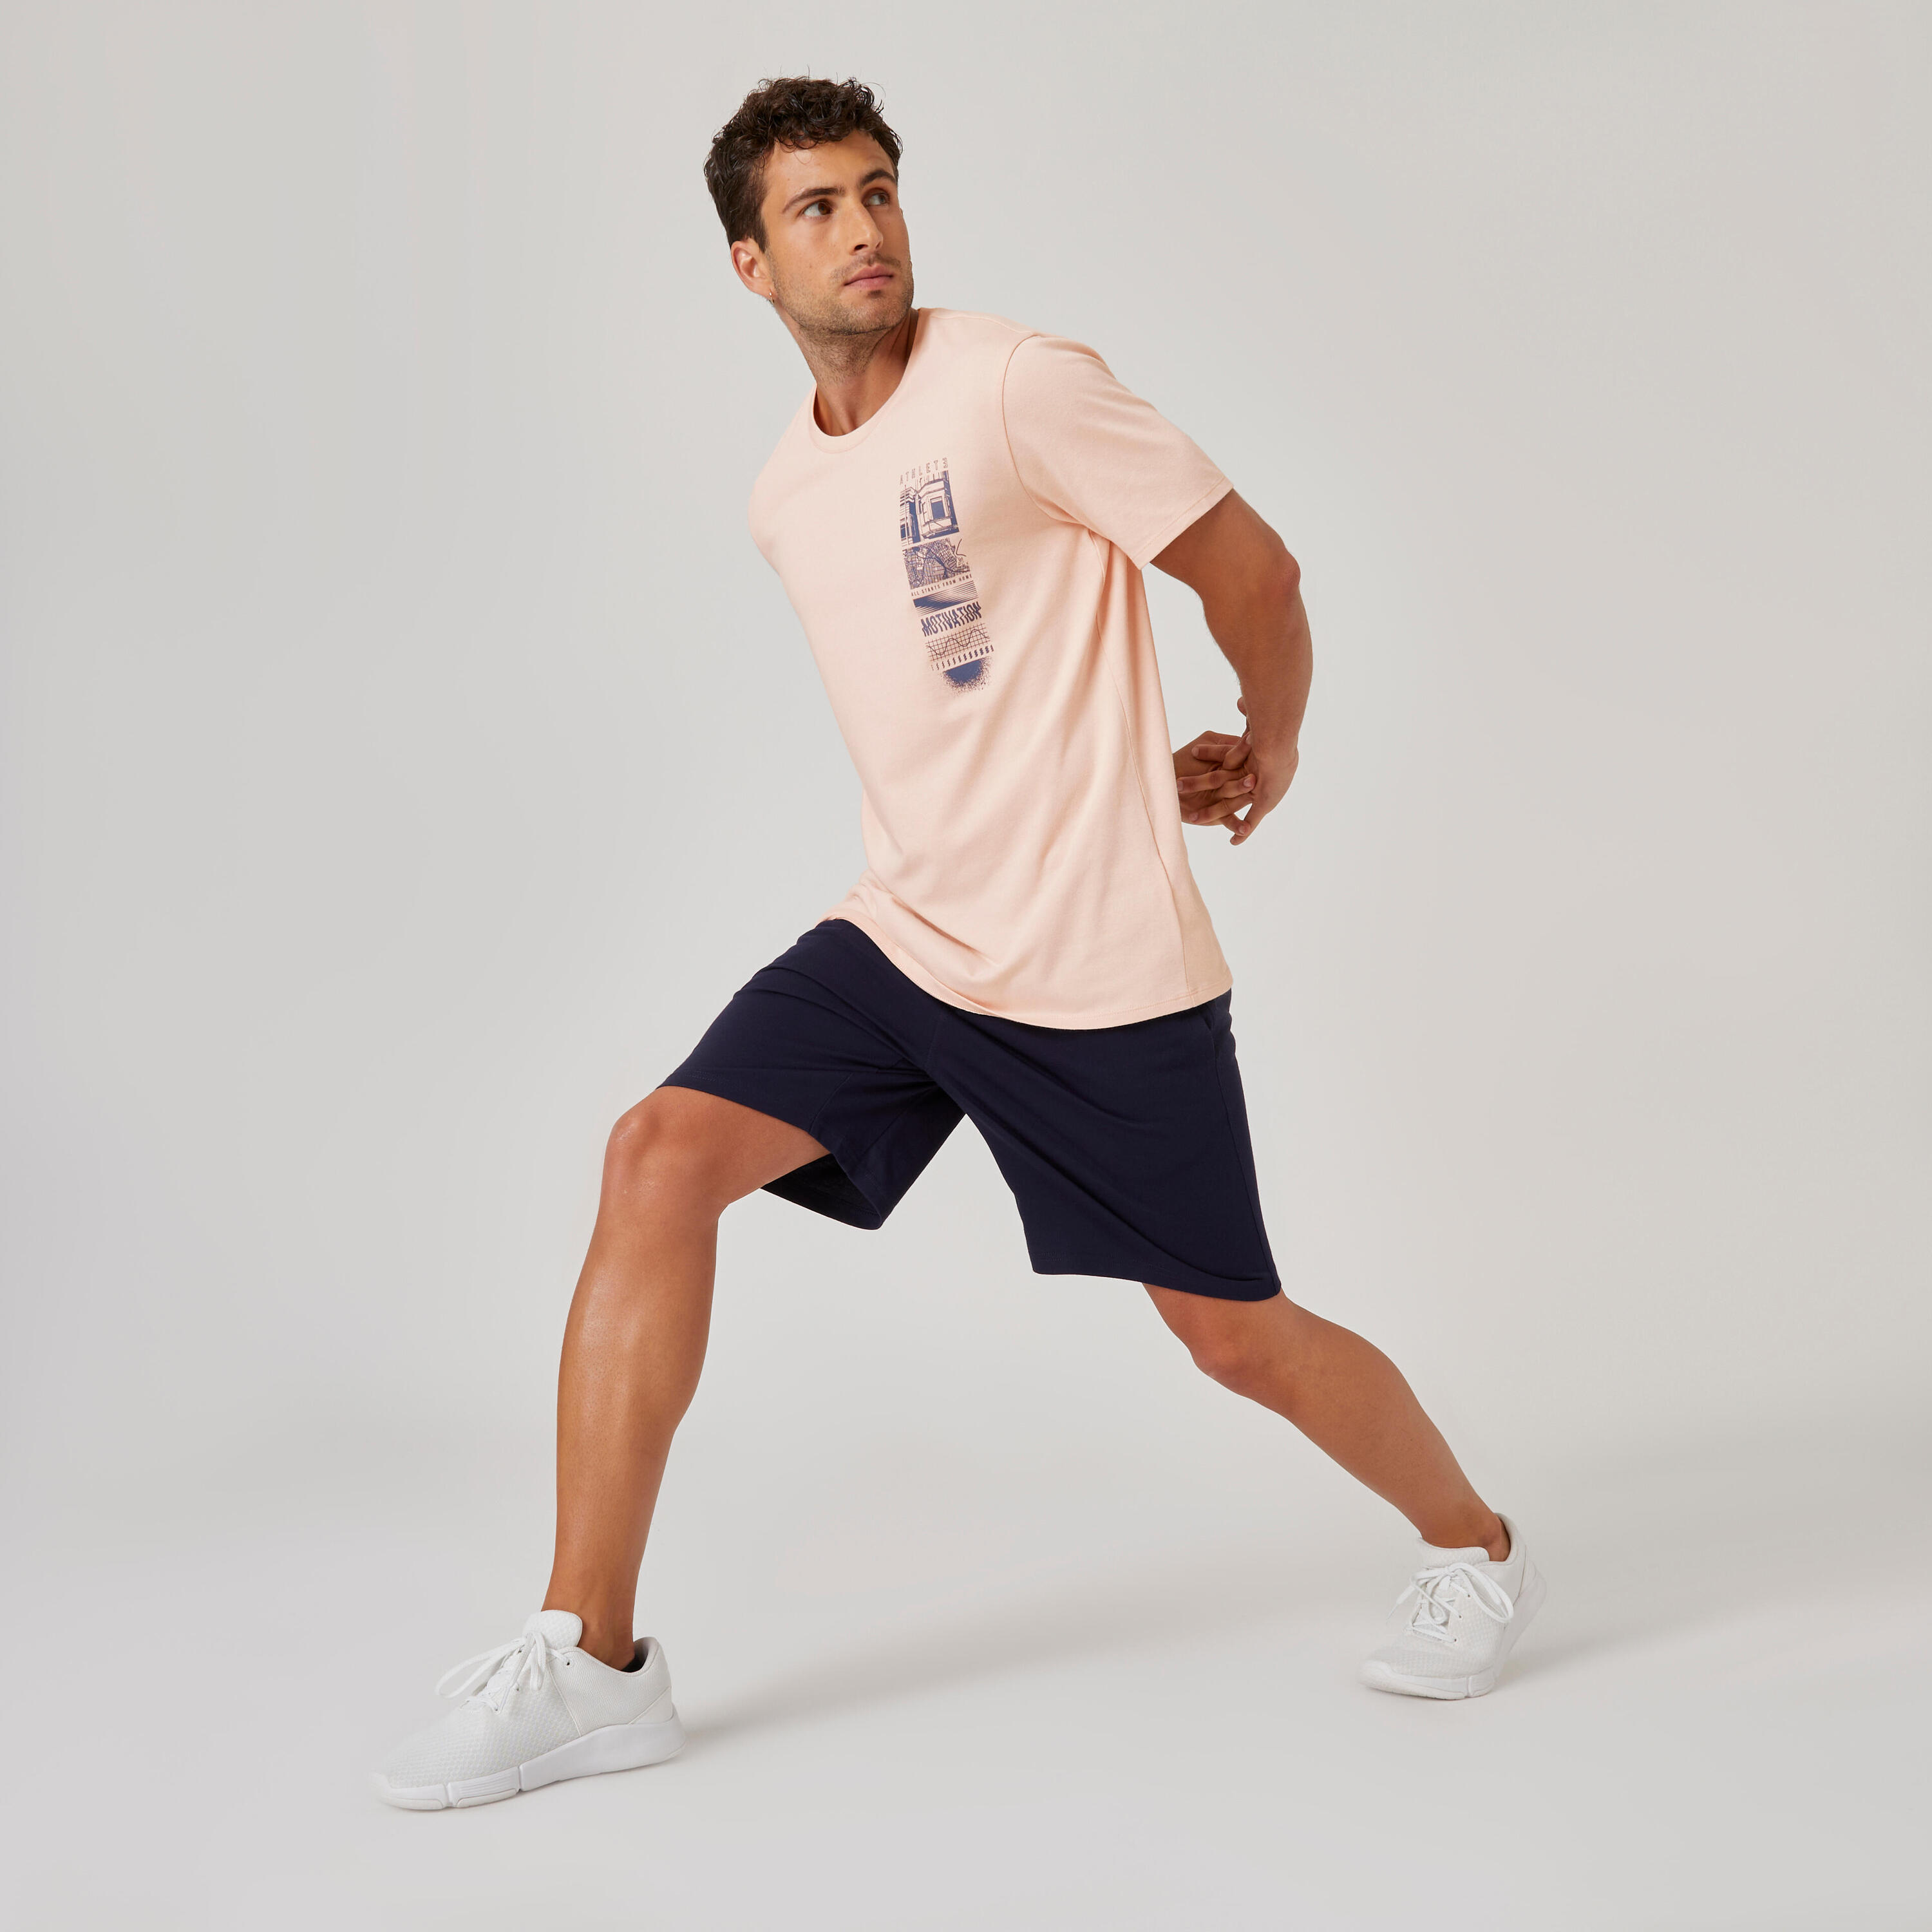 Men's Short-Sleeved Straight-Cut Crew Neck Cotton Fitness T-Shirt 500 - Pink Print 5/6